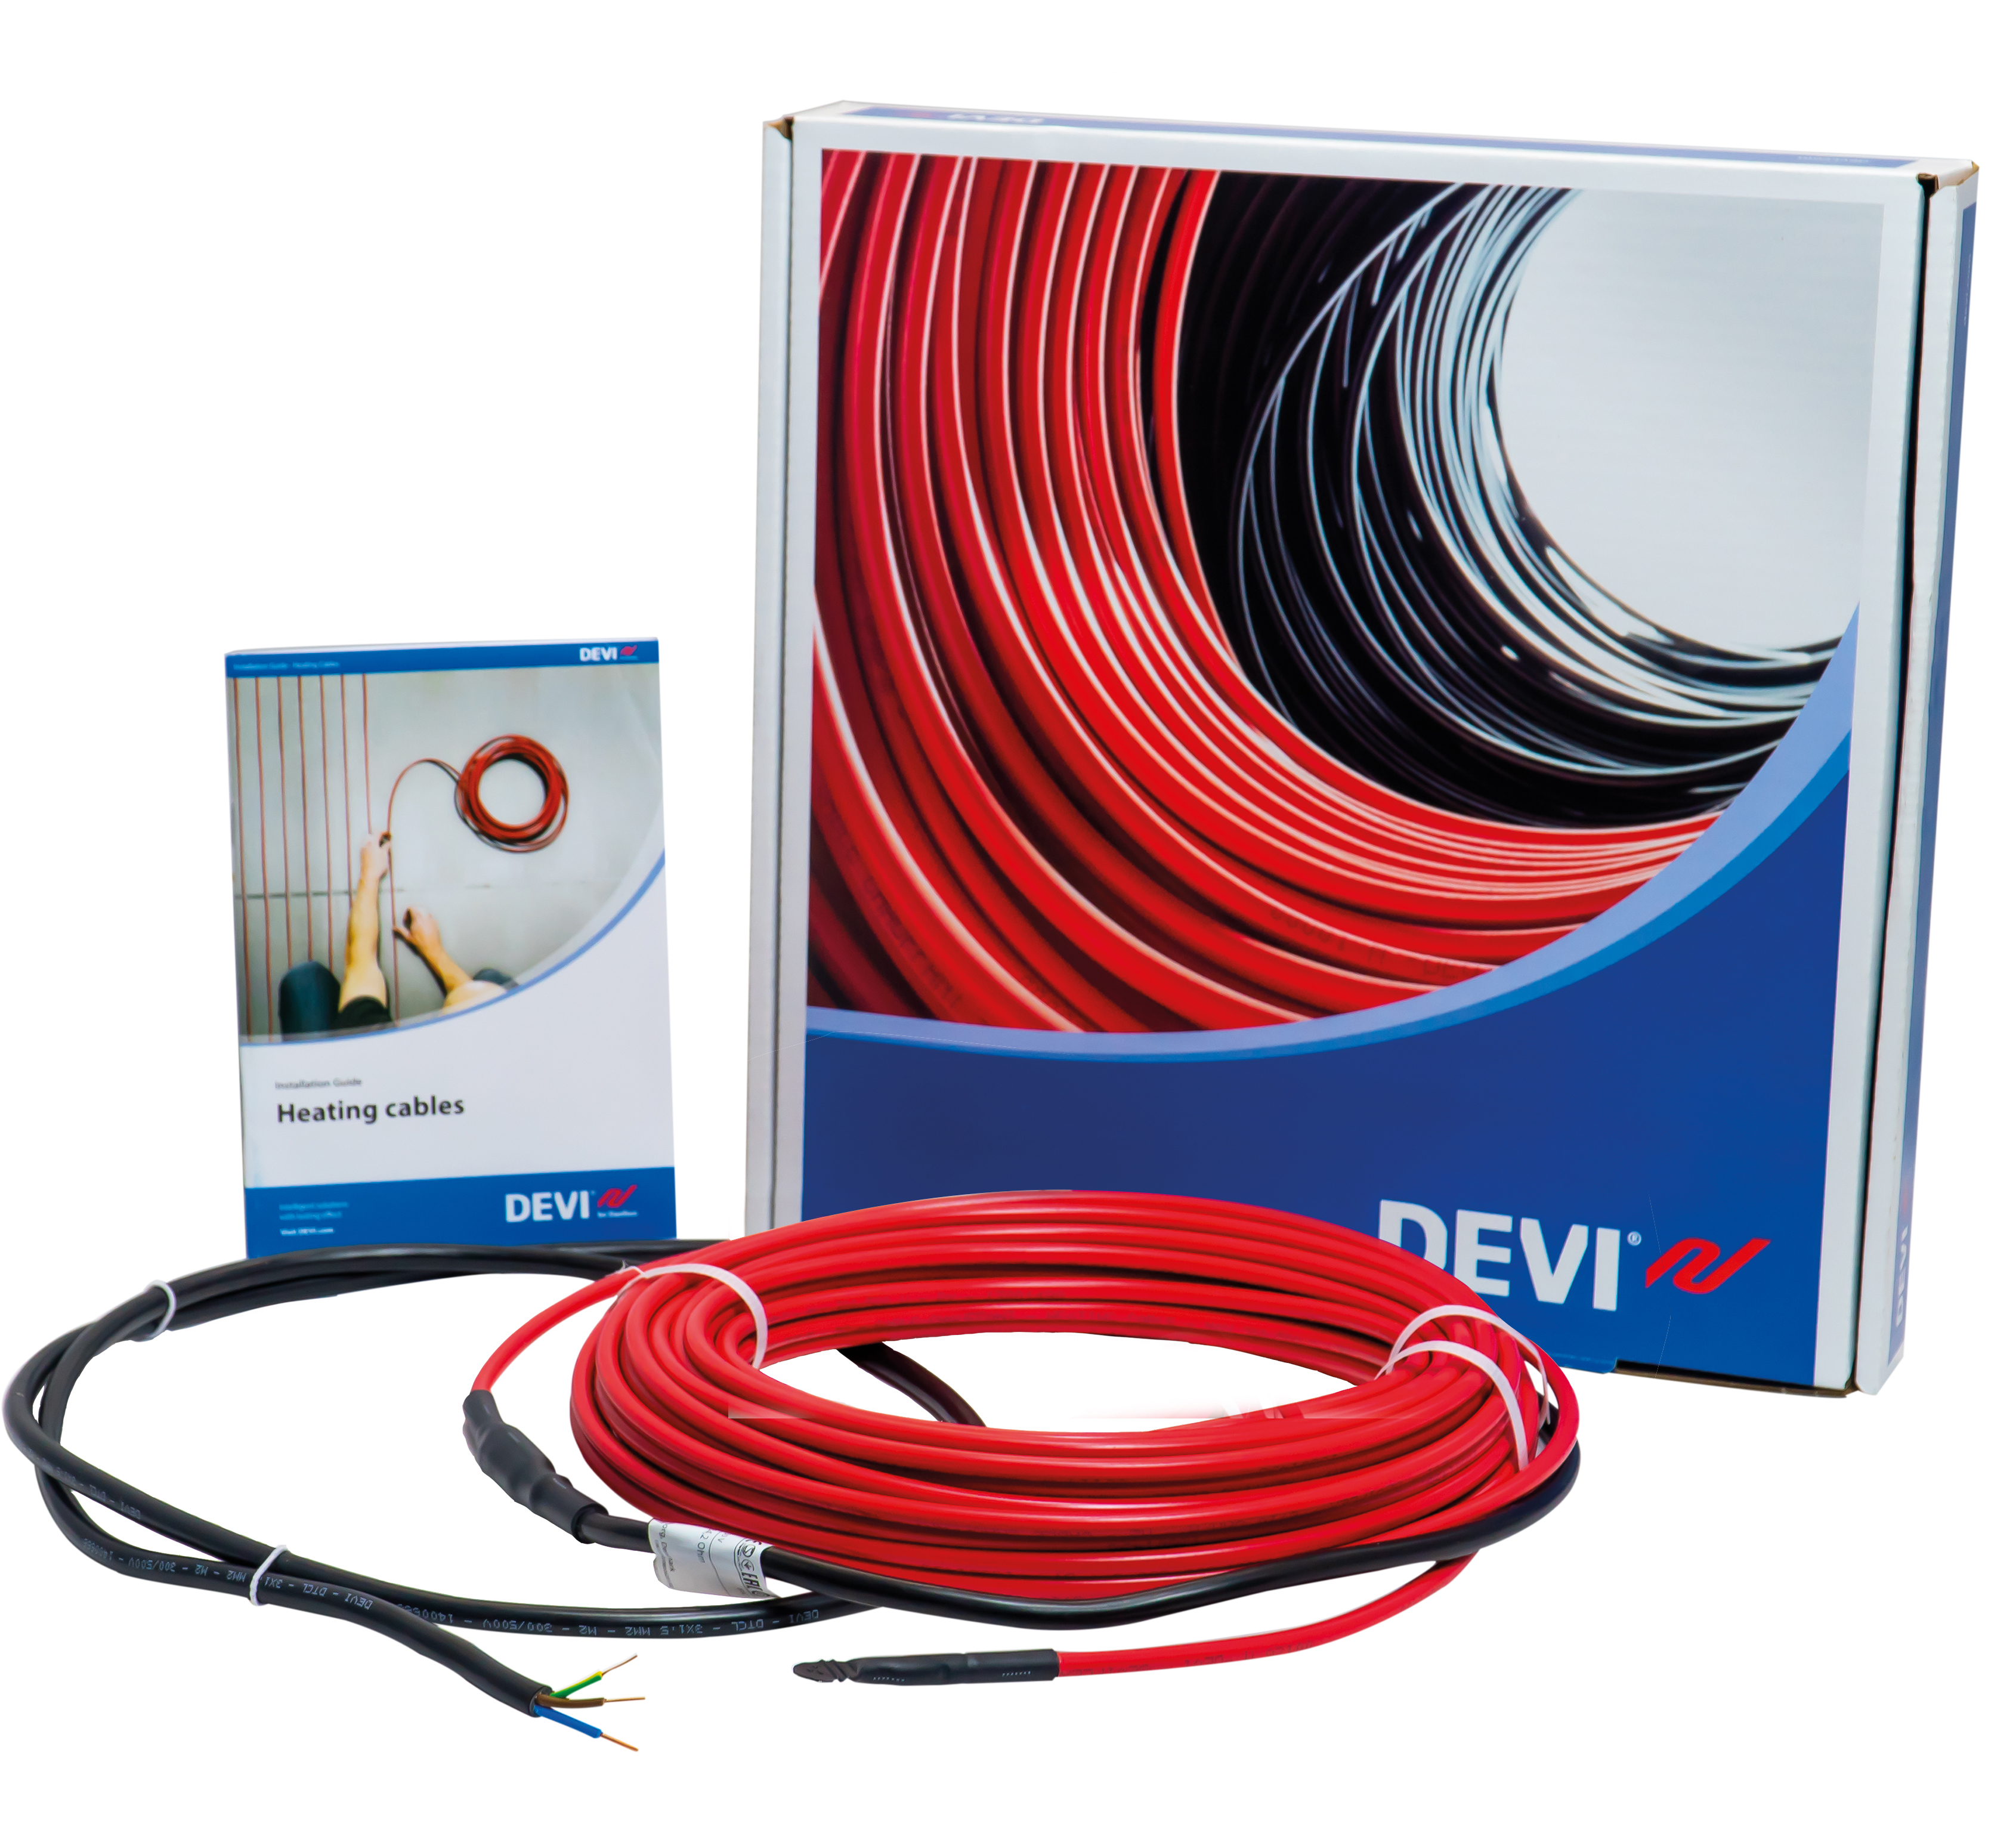 Цена греющий кабель для теплого пола Devi DEVIFlex 18T 22м (140F1238) в Киеве